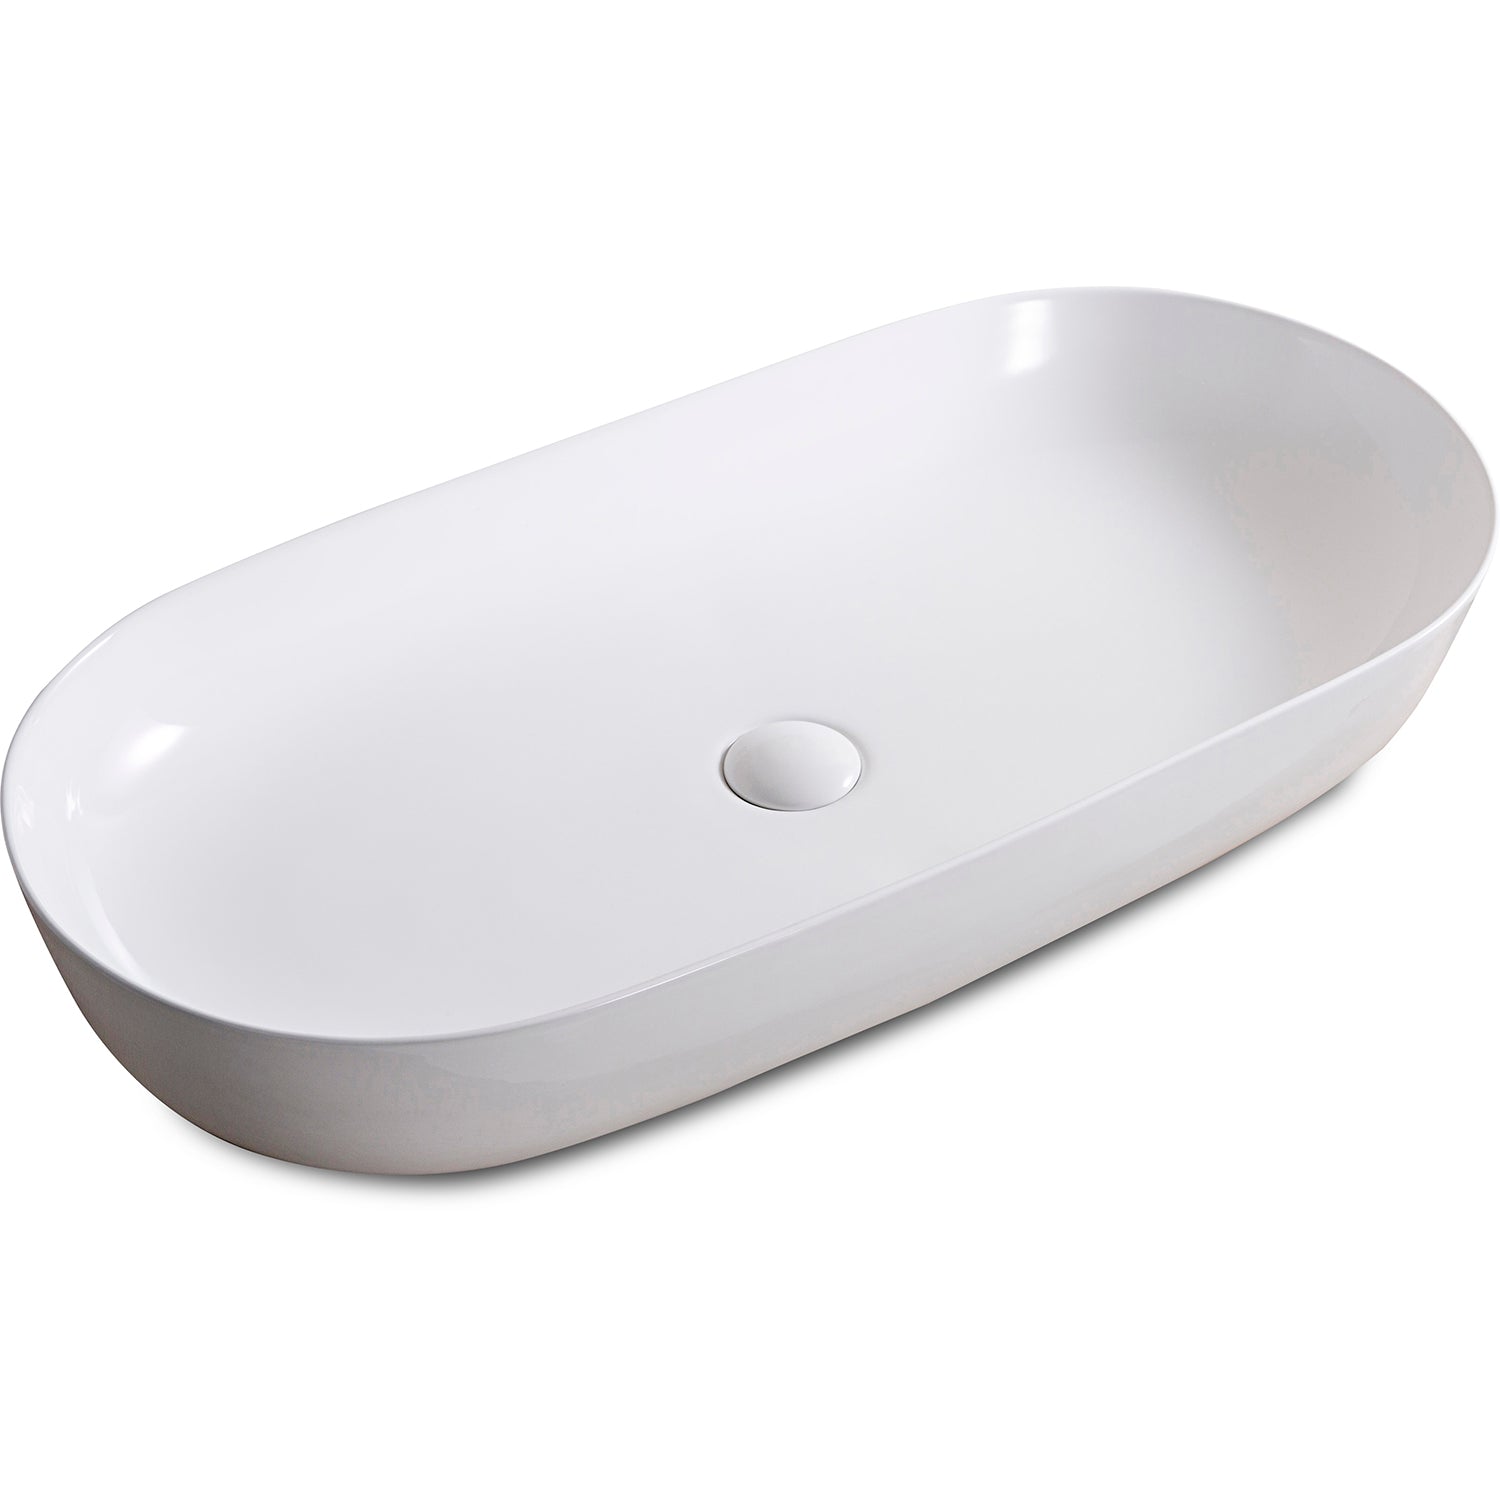 Ruvati 32 x 16 inch Bathroom Vessel Sink White Oval Above Counter Vanity Porcelain Ceramic